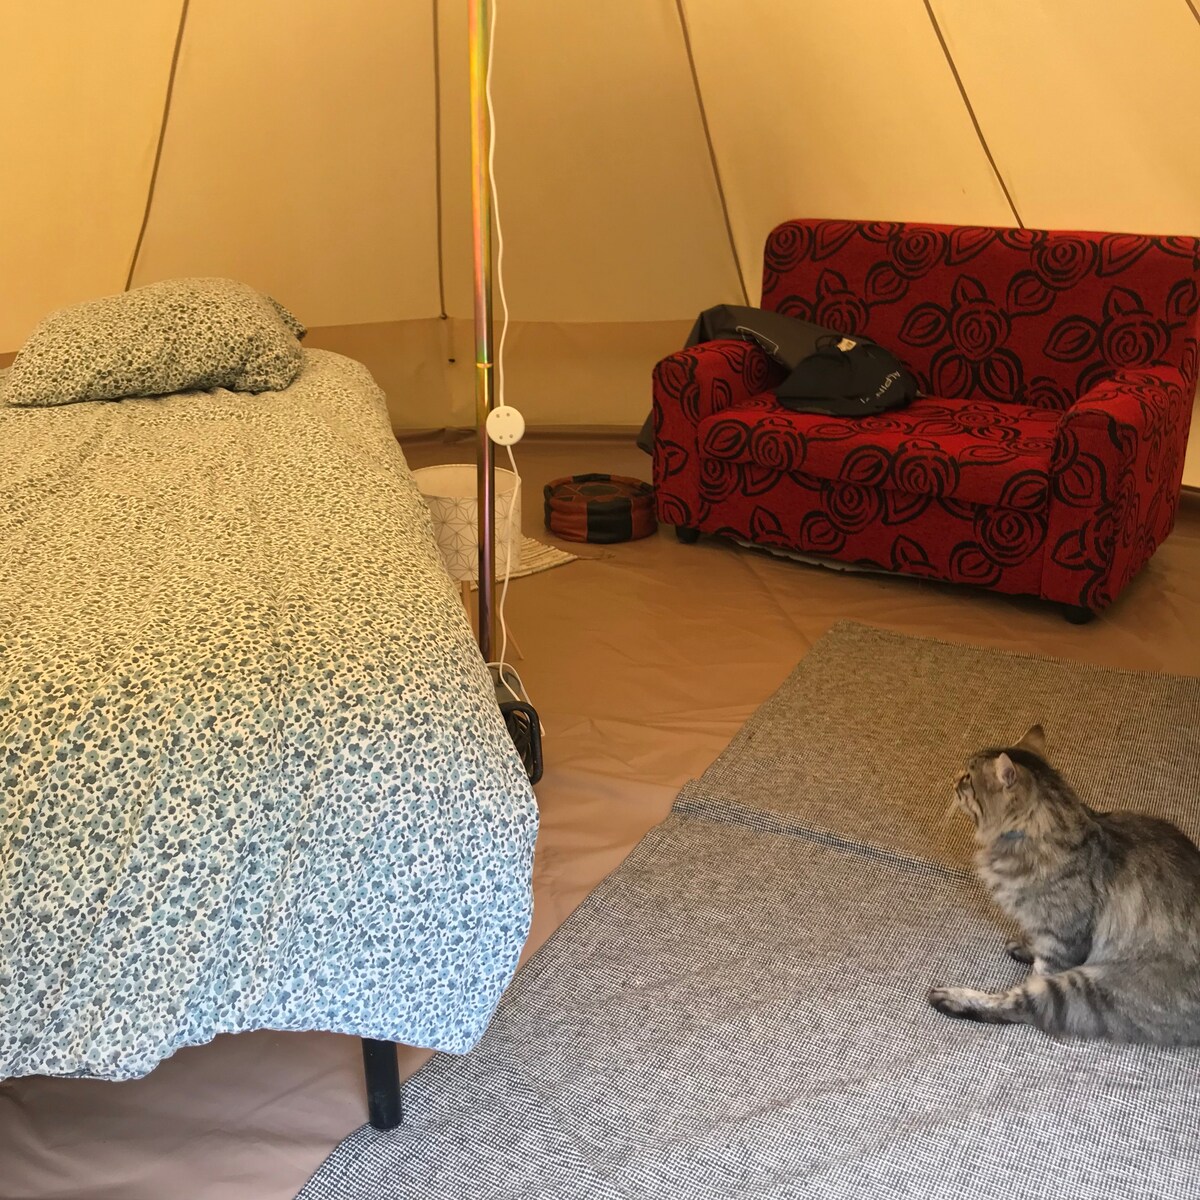 Nuit dans une tente inuite